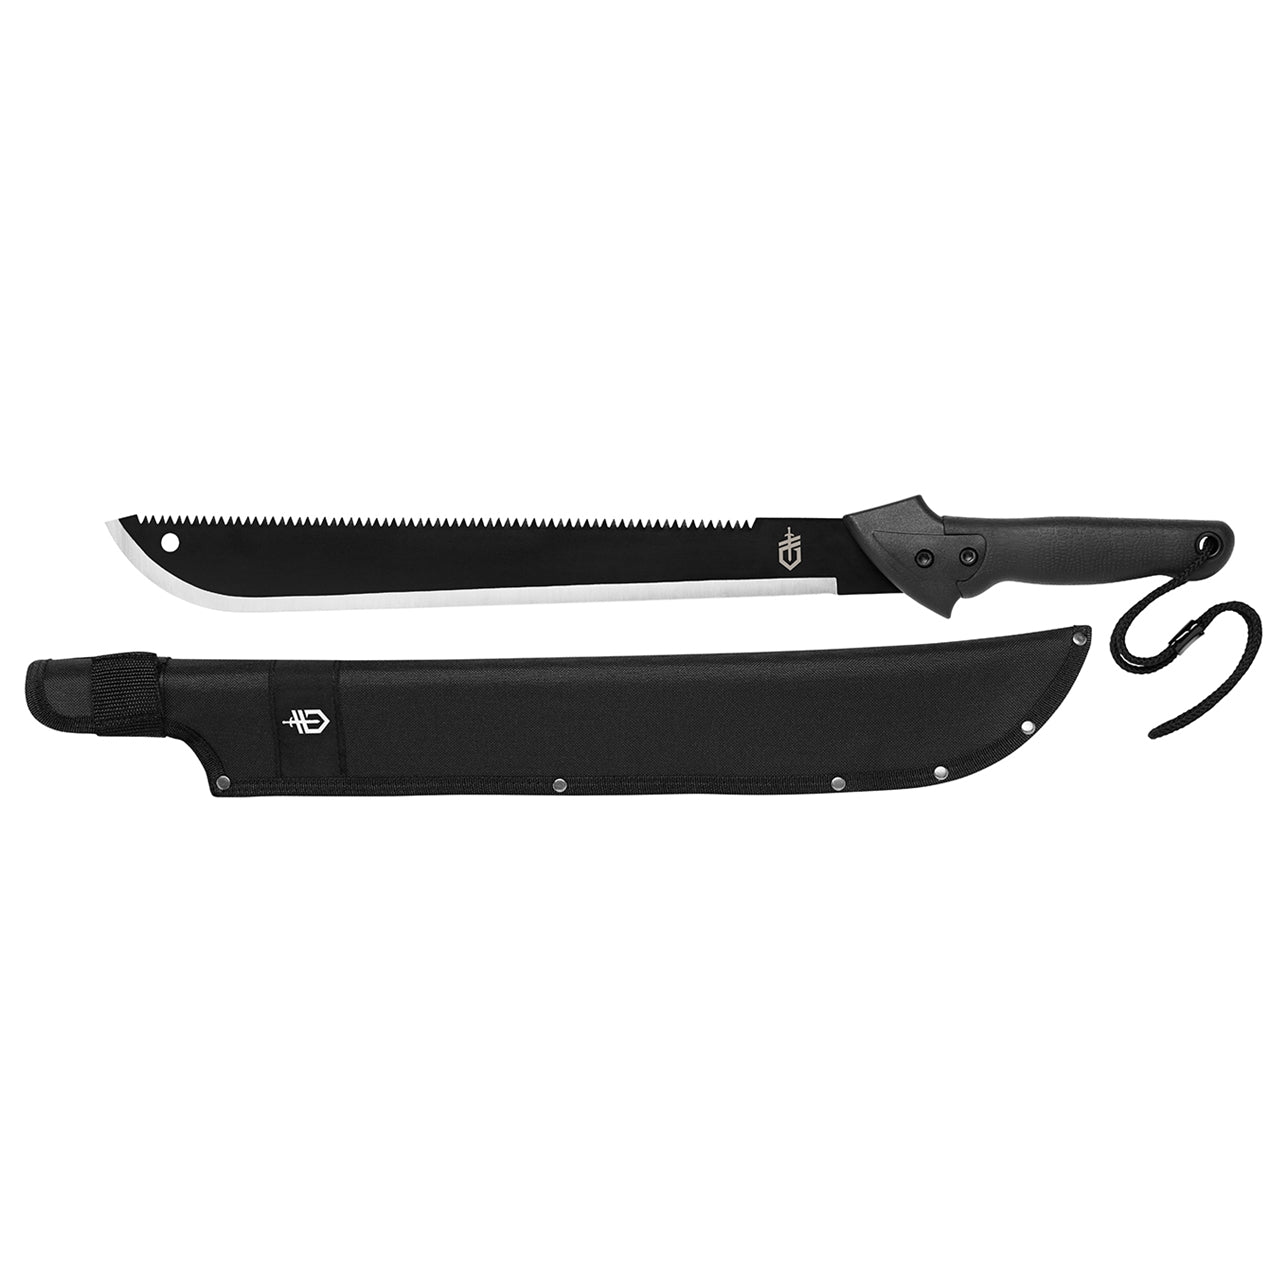 gerber gator machete weapon for sale near austin texas at hawkes outdoors 2102512882